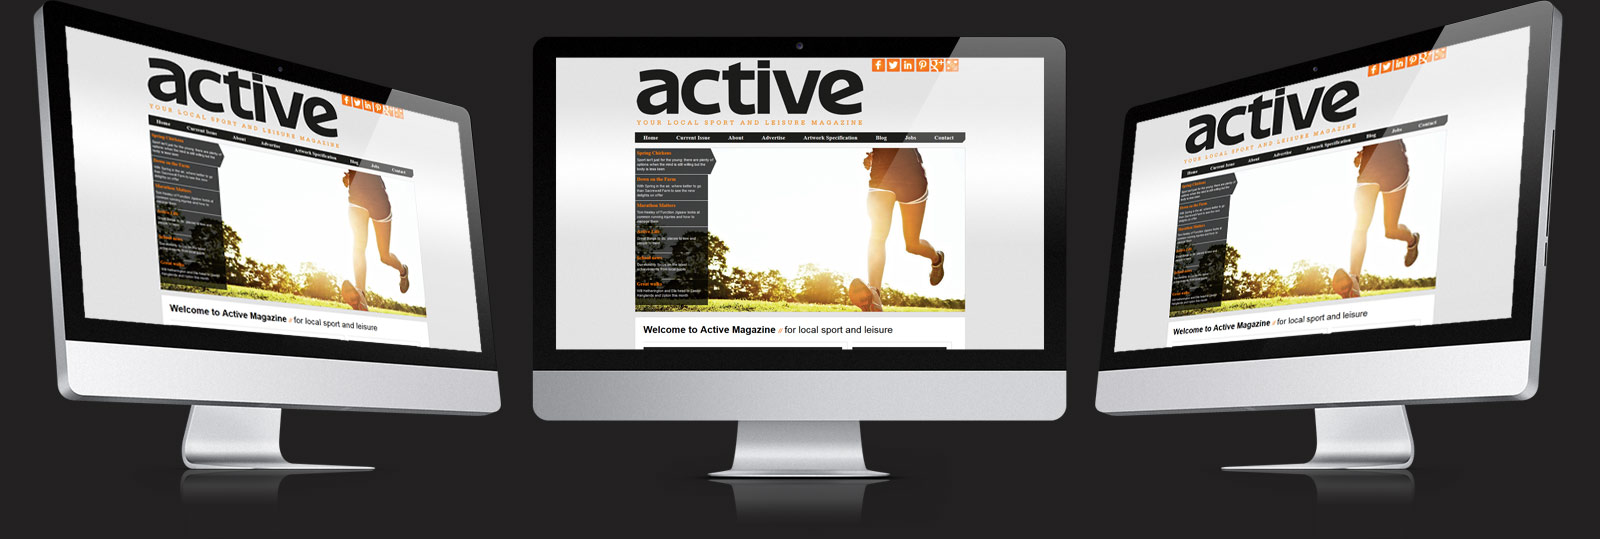 Stamford Web Design - The Active Magazine1